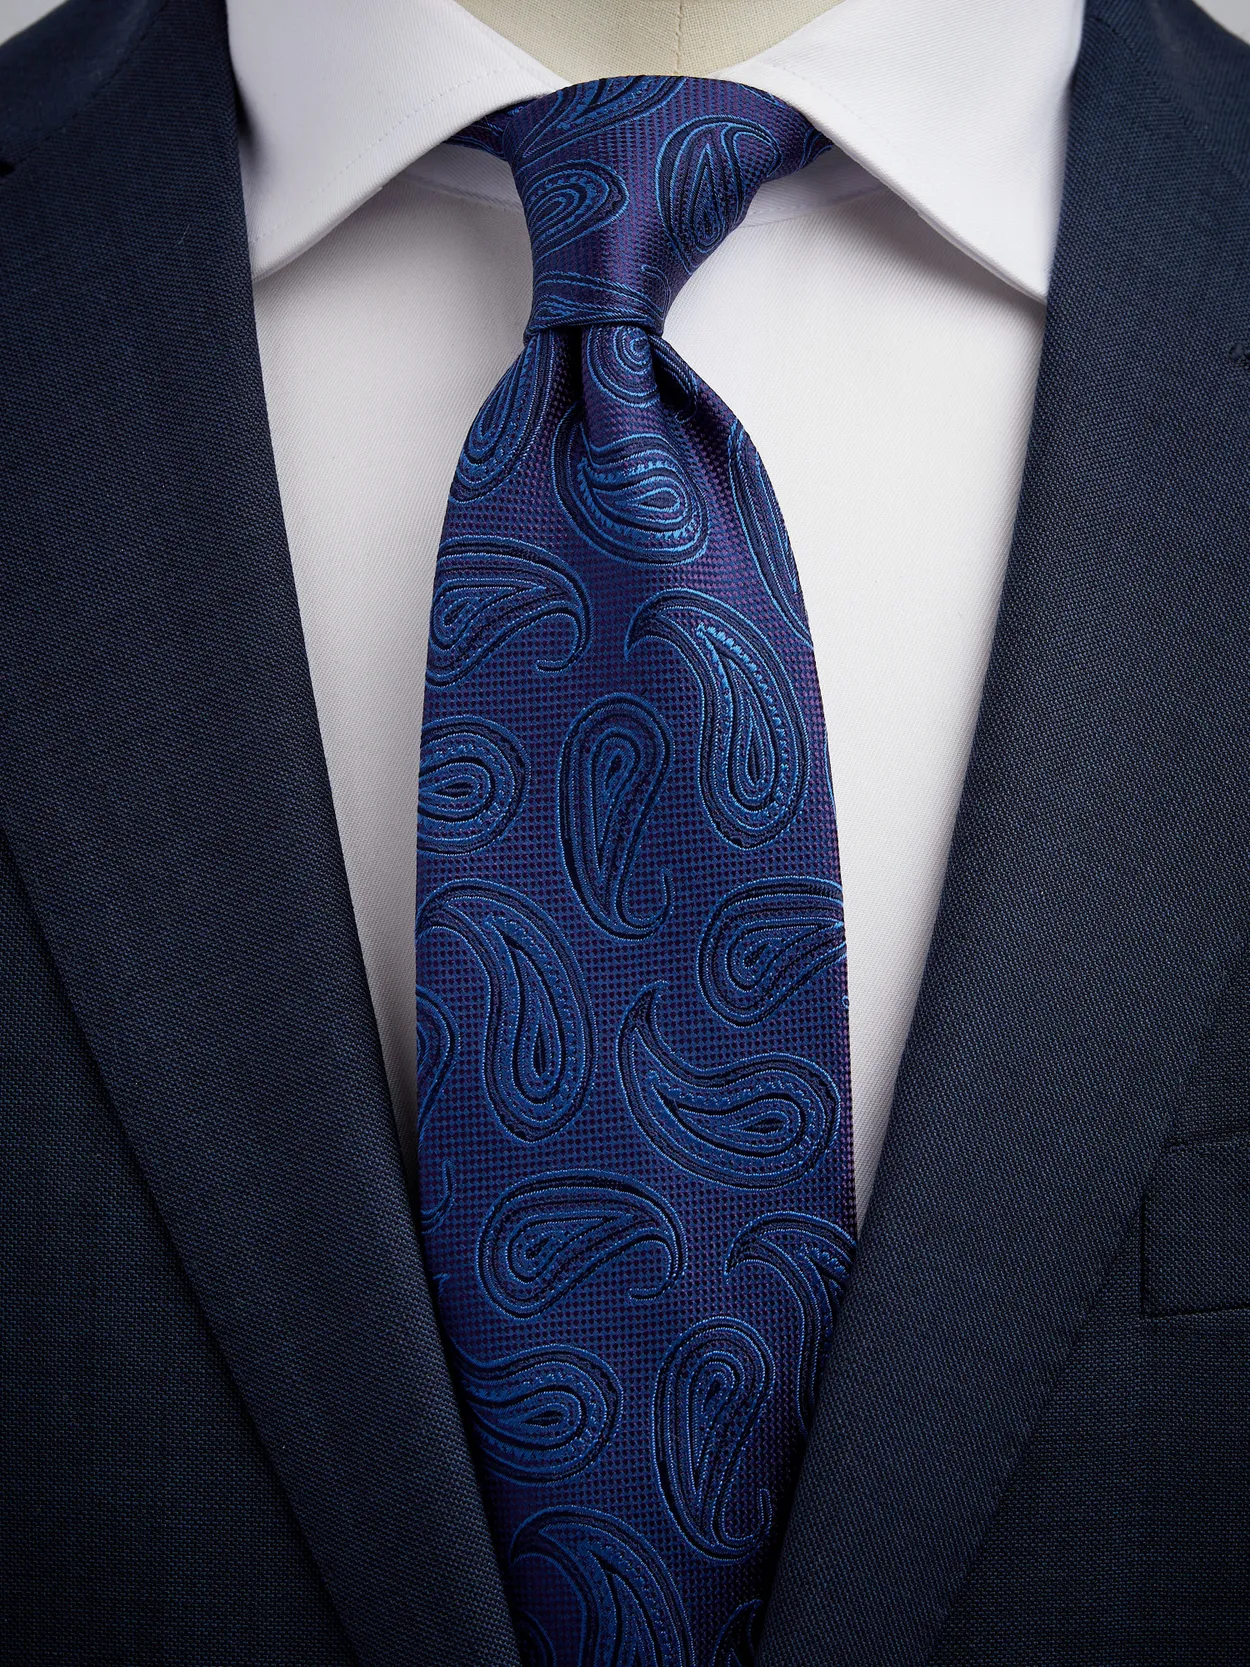 Blue & Purple Tie Paisley